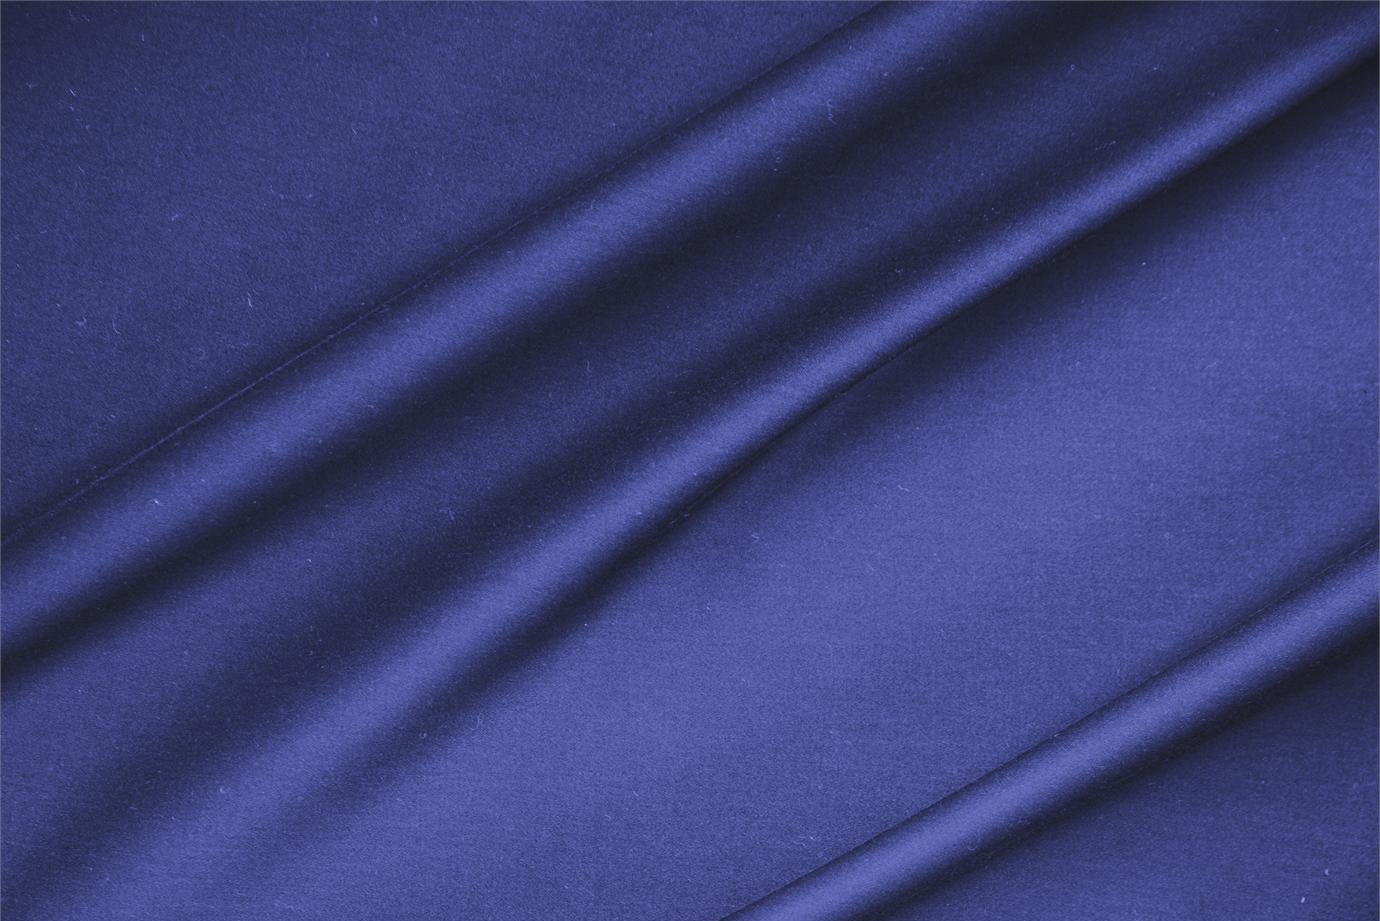 Sapphire Blue Cotton, Stretch Lightweight cotton sateen stretch fabric for dressmaking